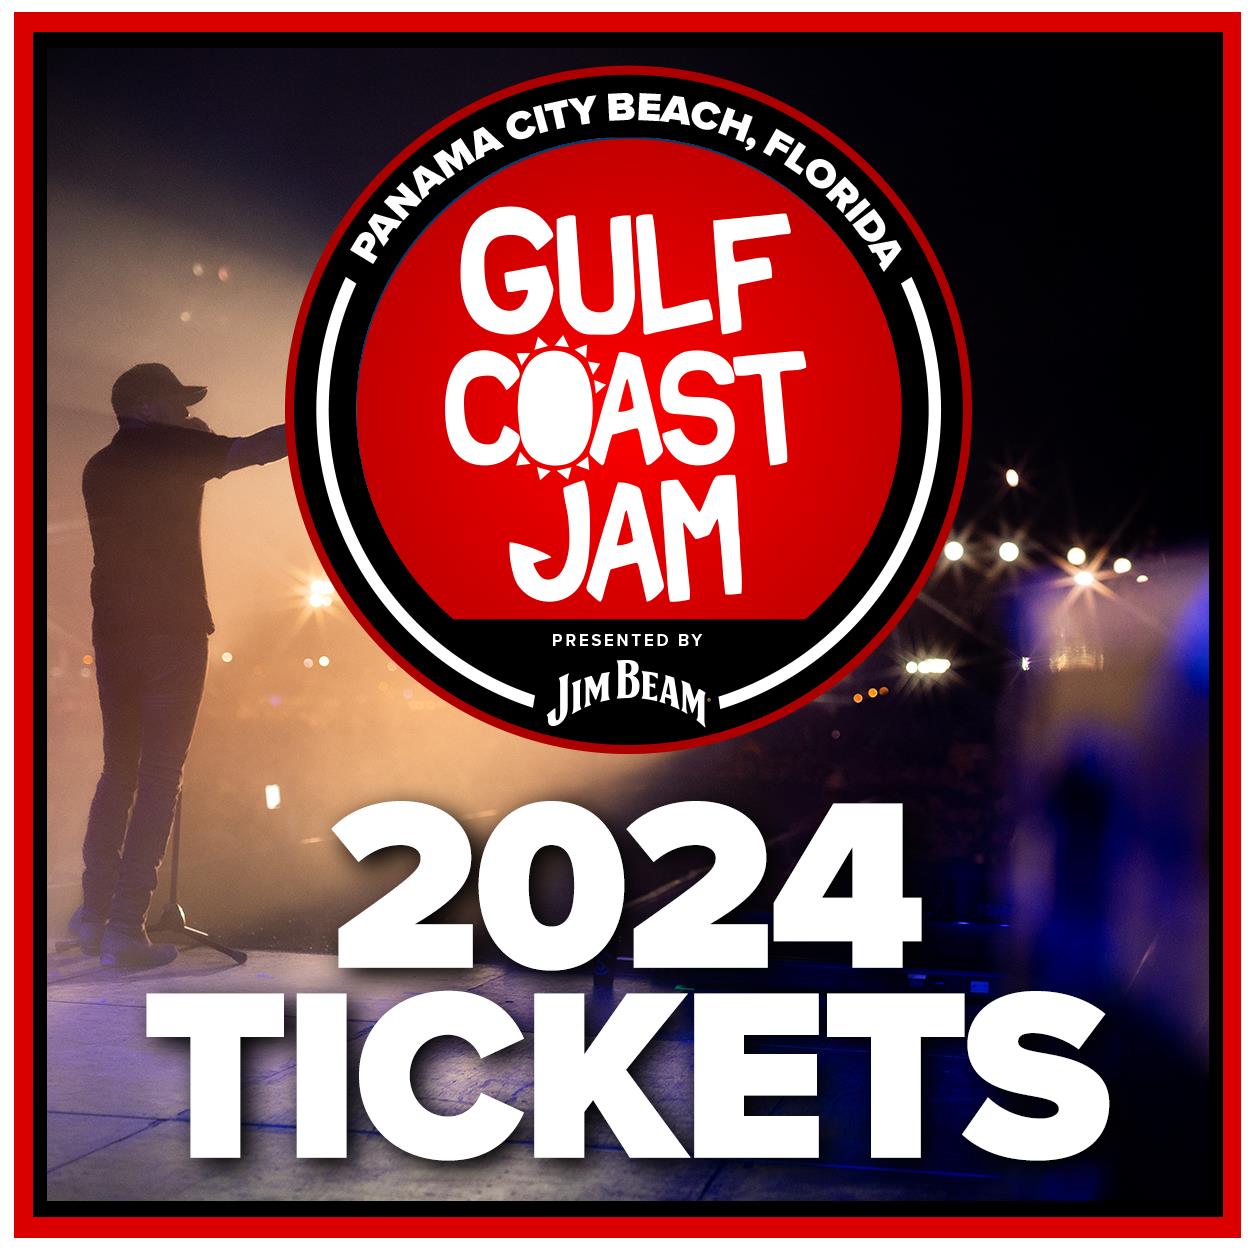 Buy Tickets to Gulf Coast Jam 2024 in Panama City Beach on May 30, 2024